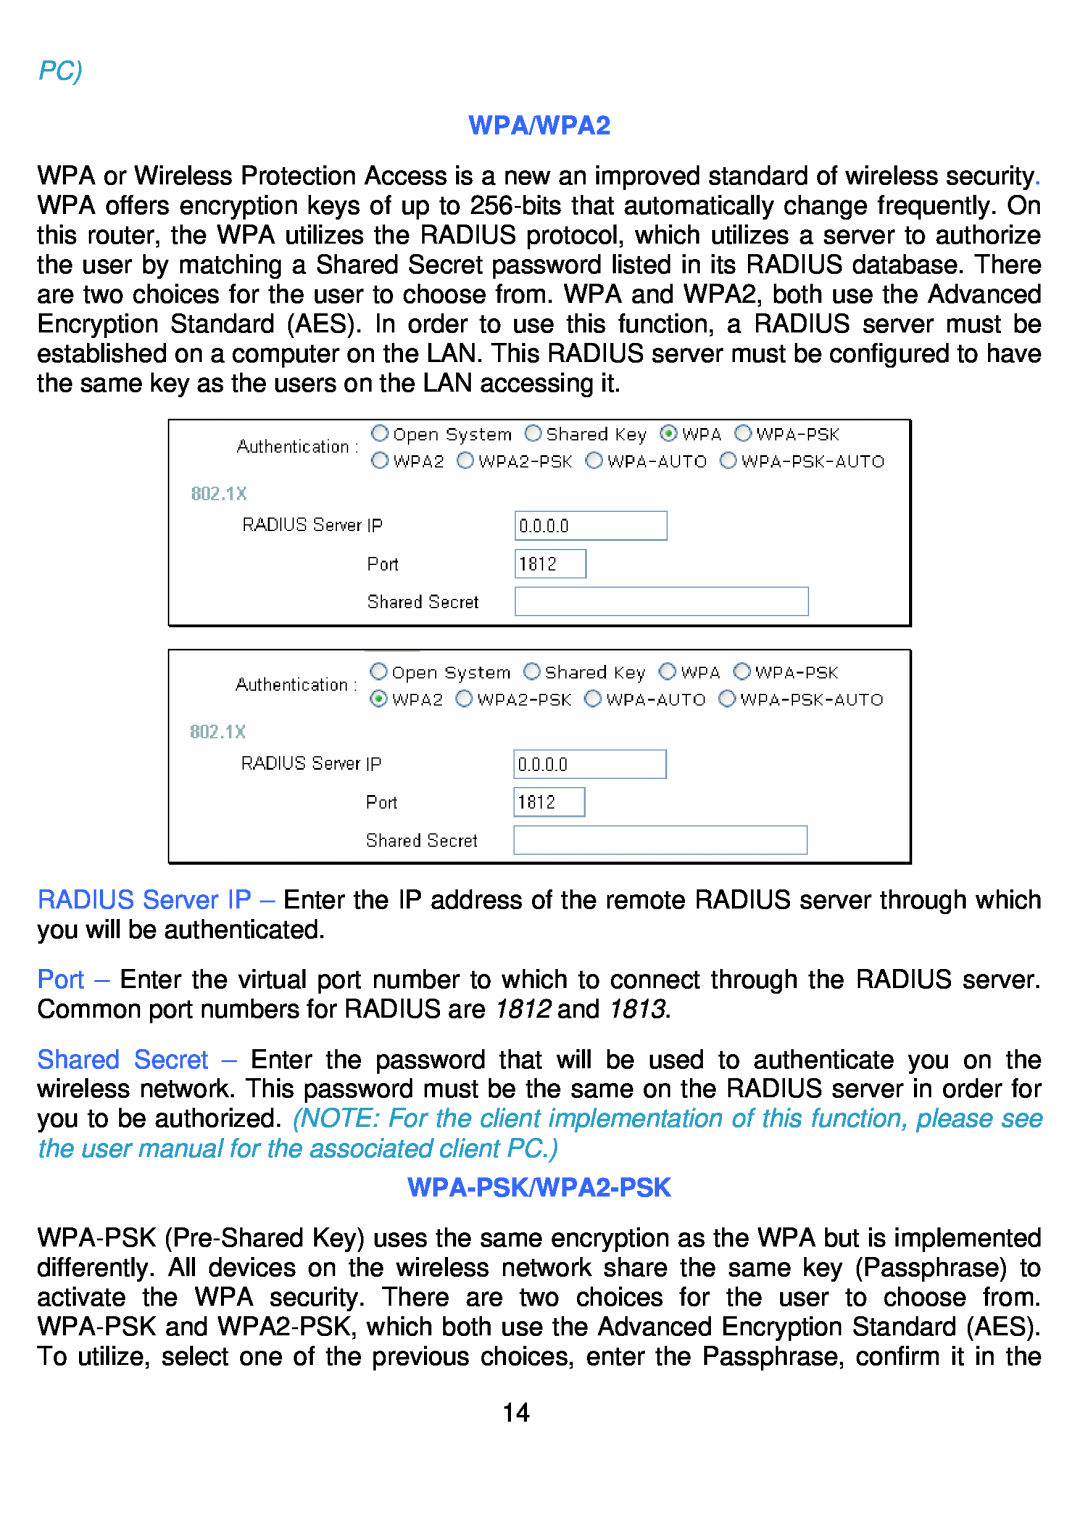 D-Link DI-524UP manual WPA/WPA2, WPA-PSK/WPA2-PSK 